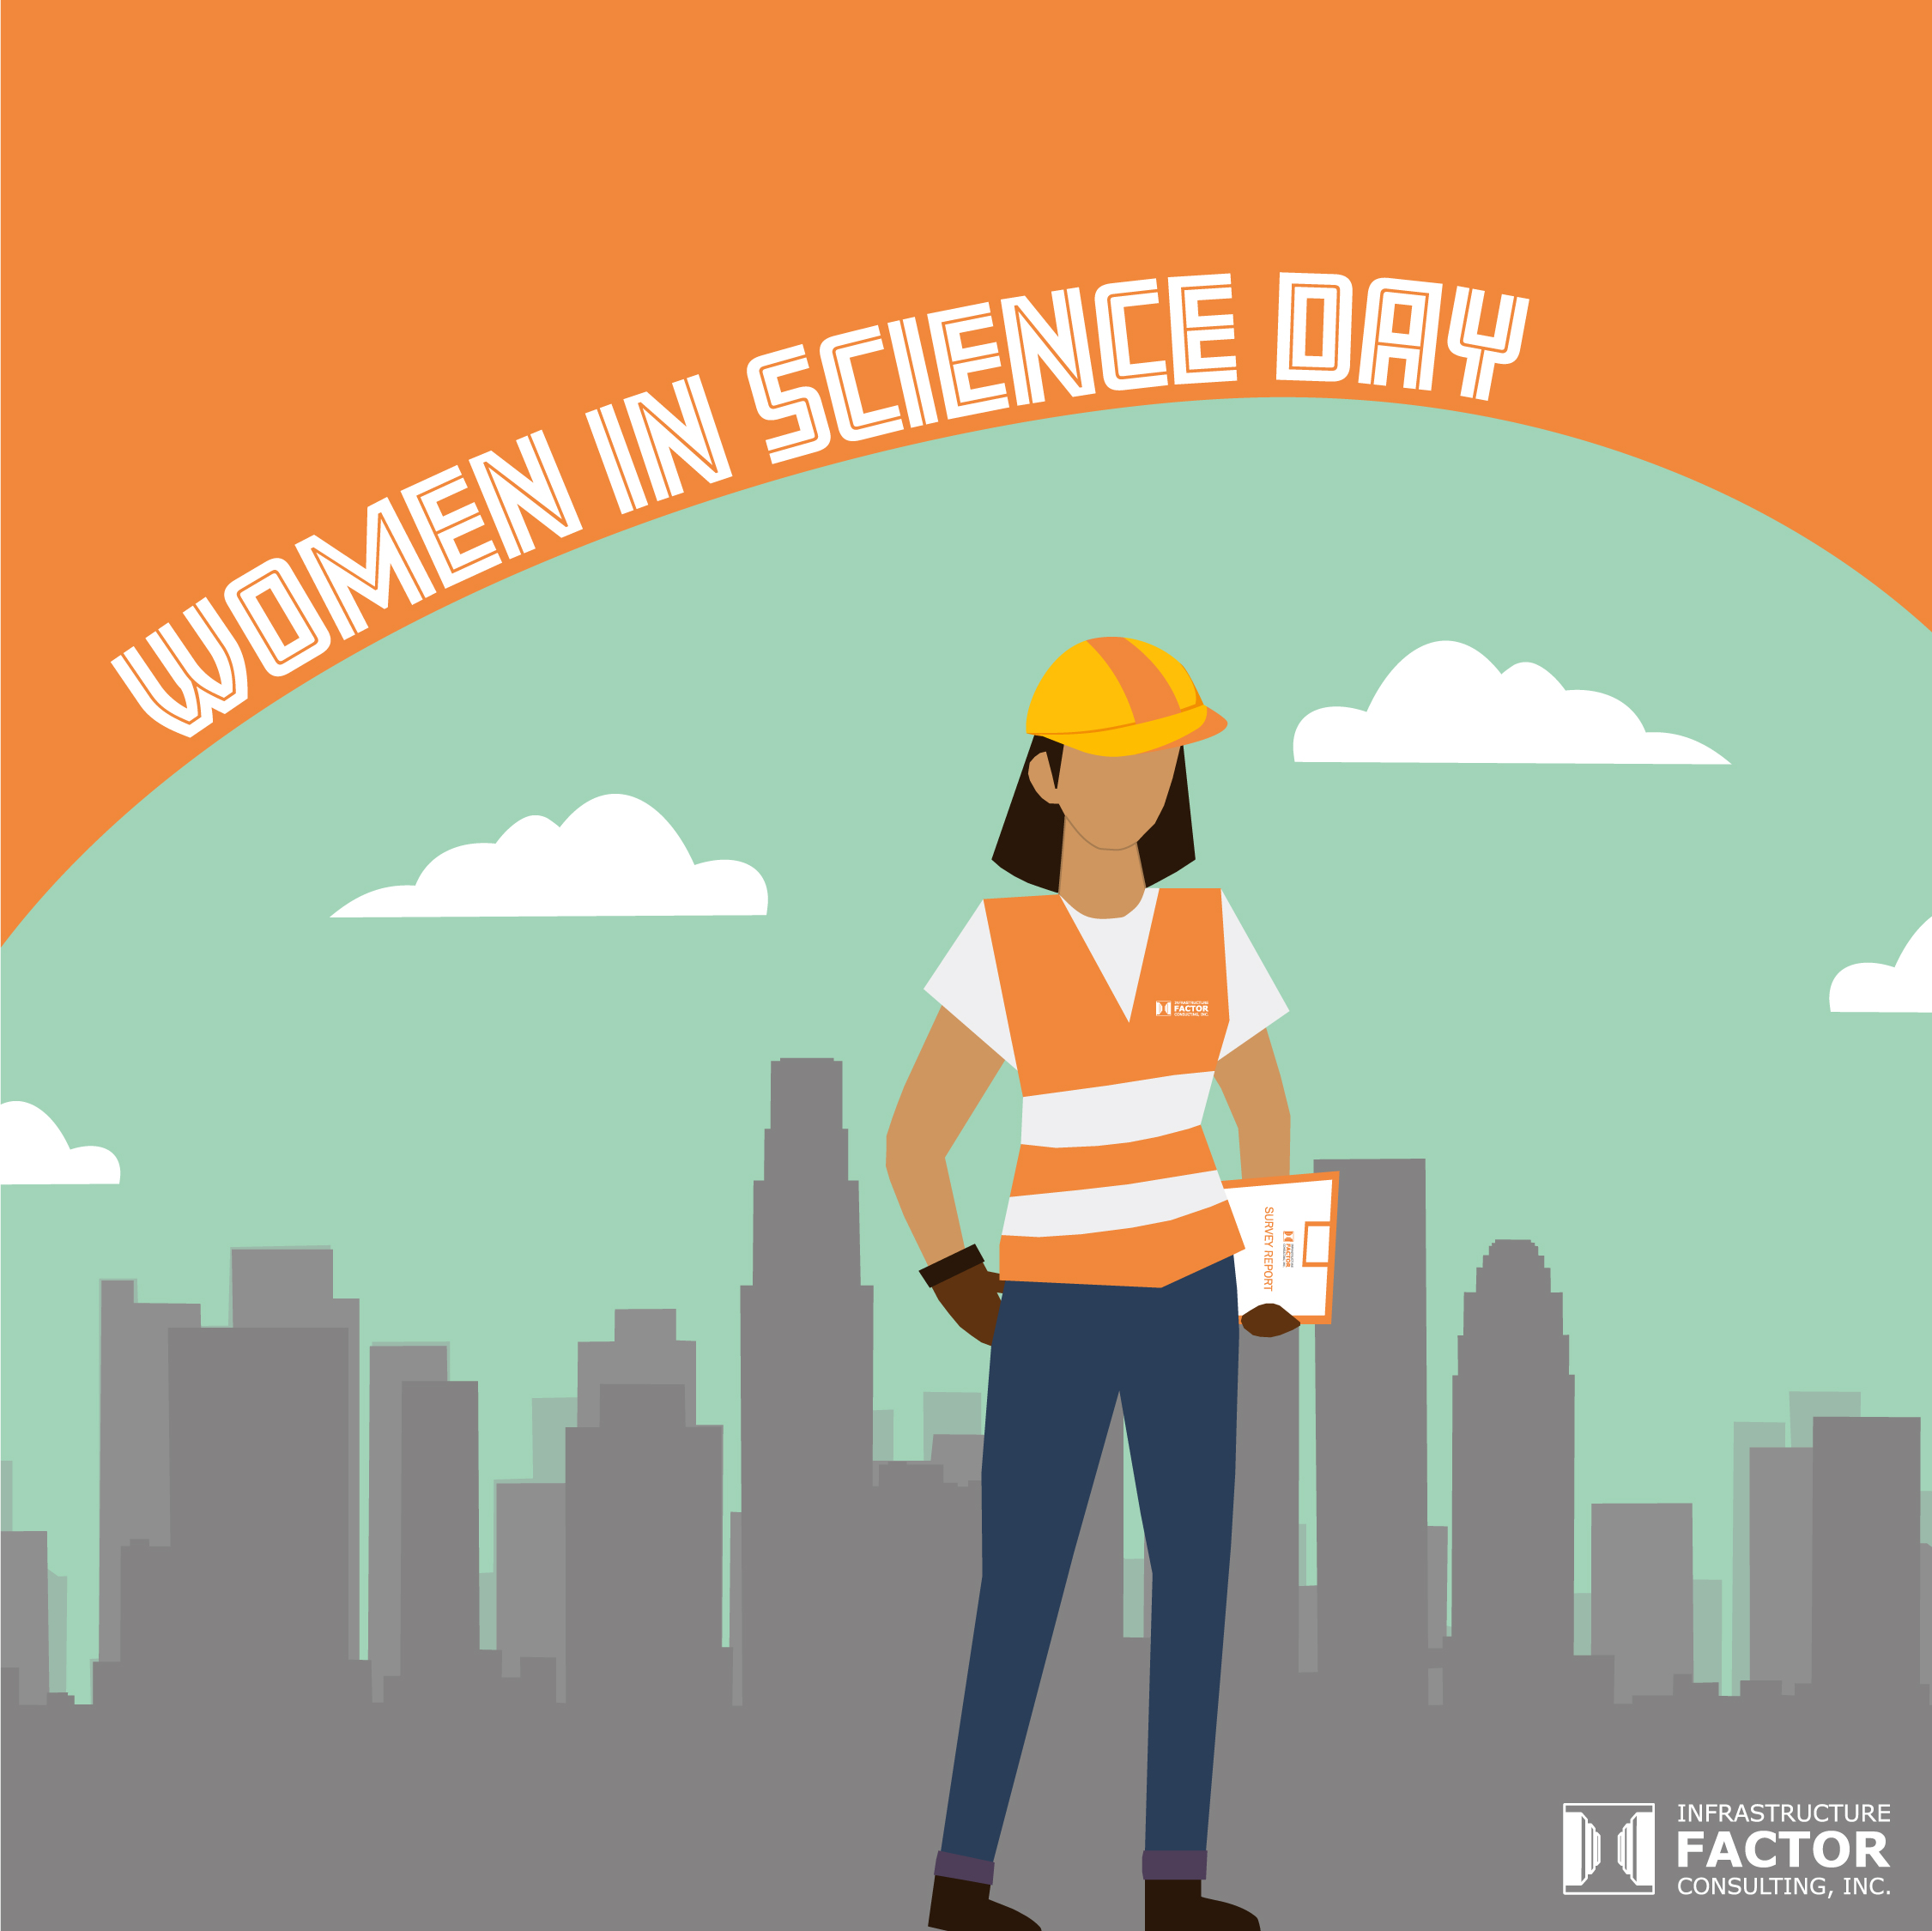 Women in Science Day